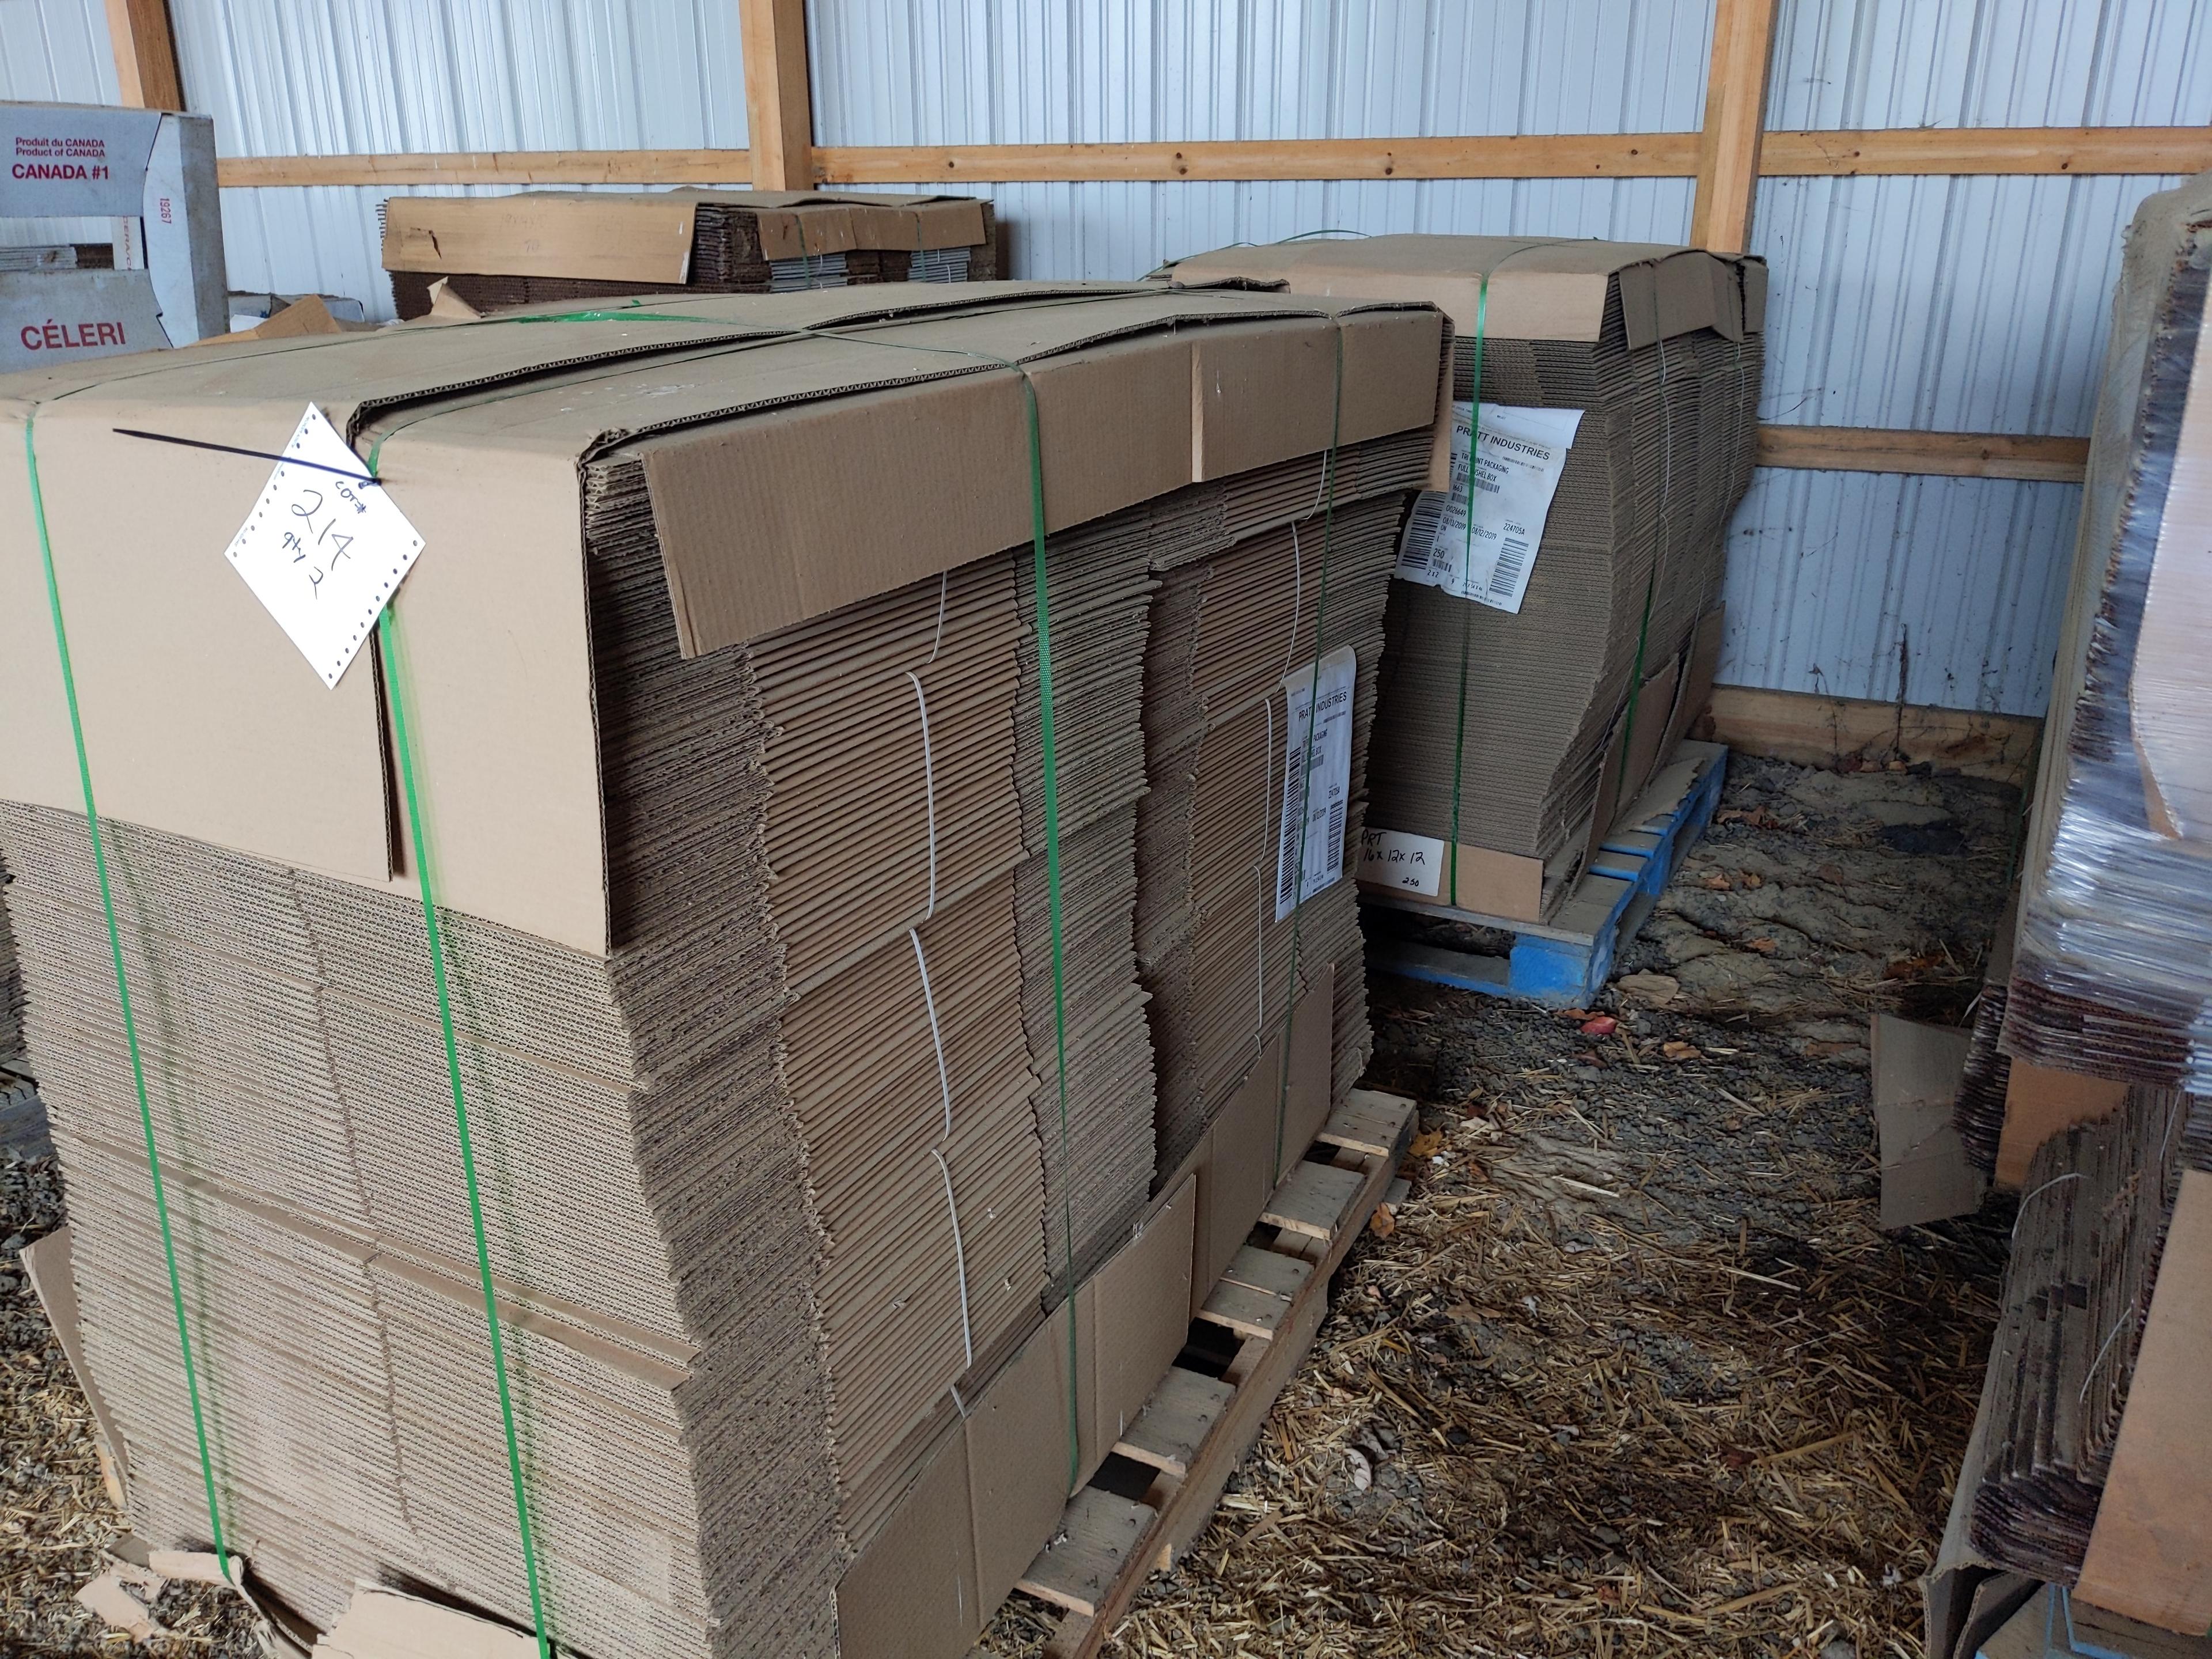 Non-waxed Cardboard 1 bushel boxes